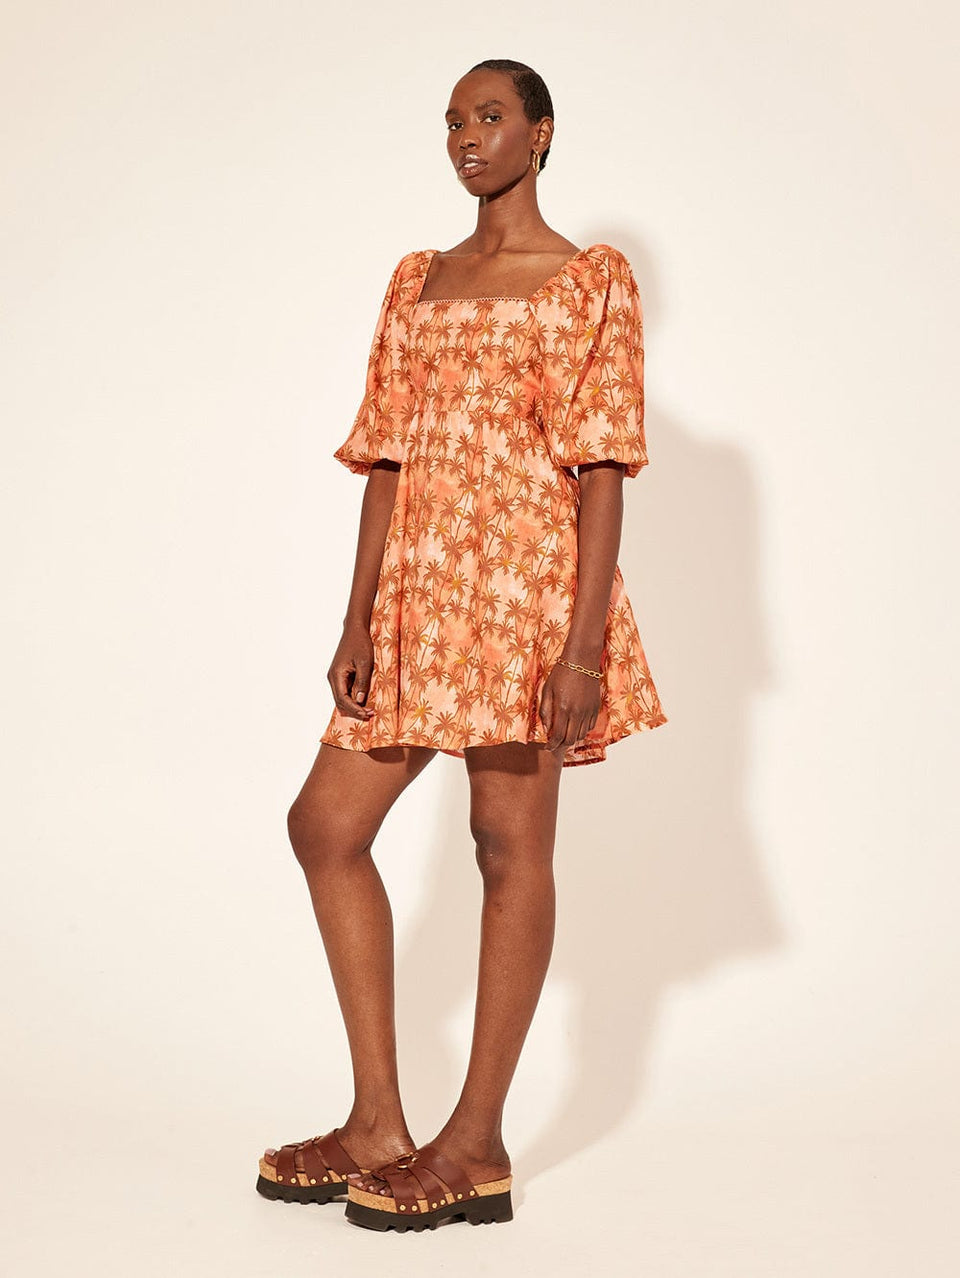 Leilani Mini Dress KIVARI | Model wears bronze and peach palm printed mini dress